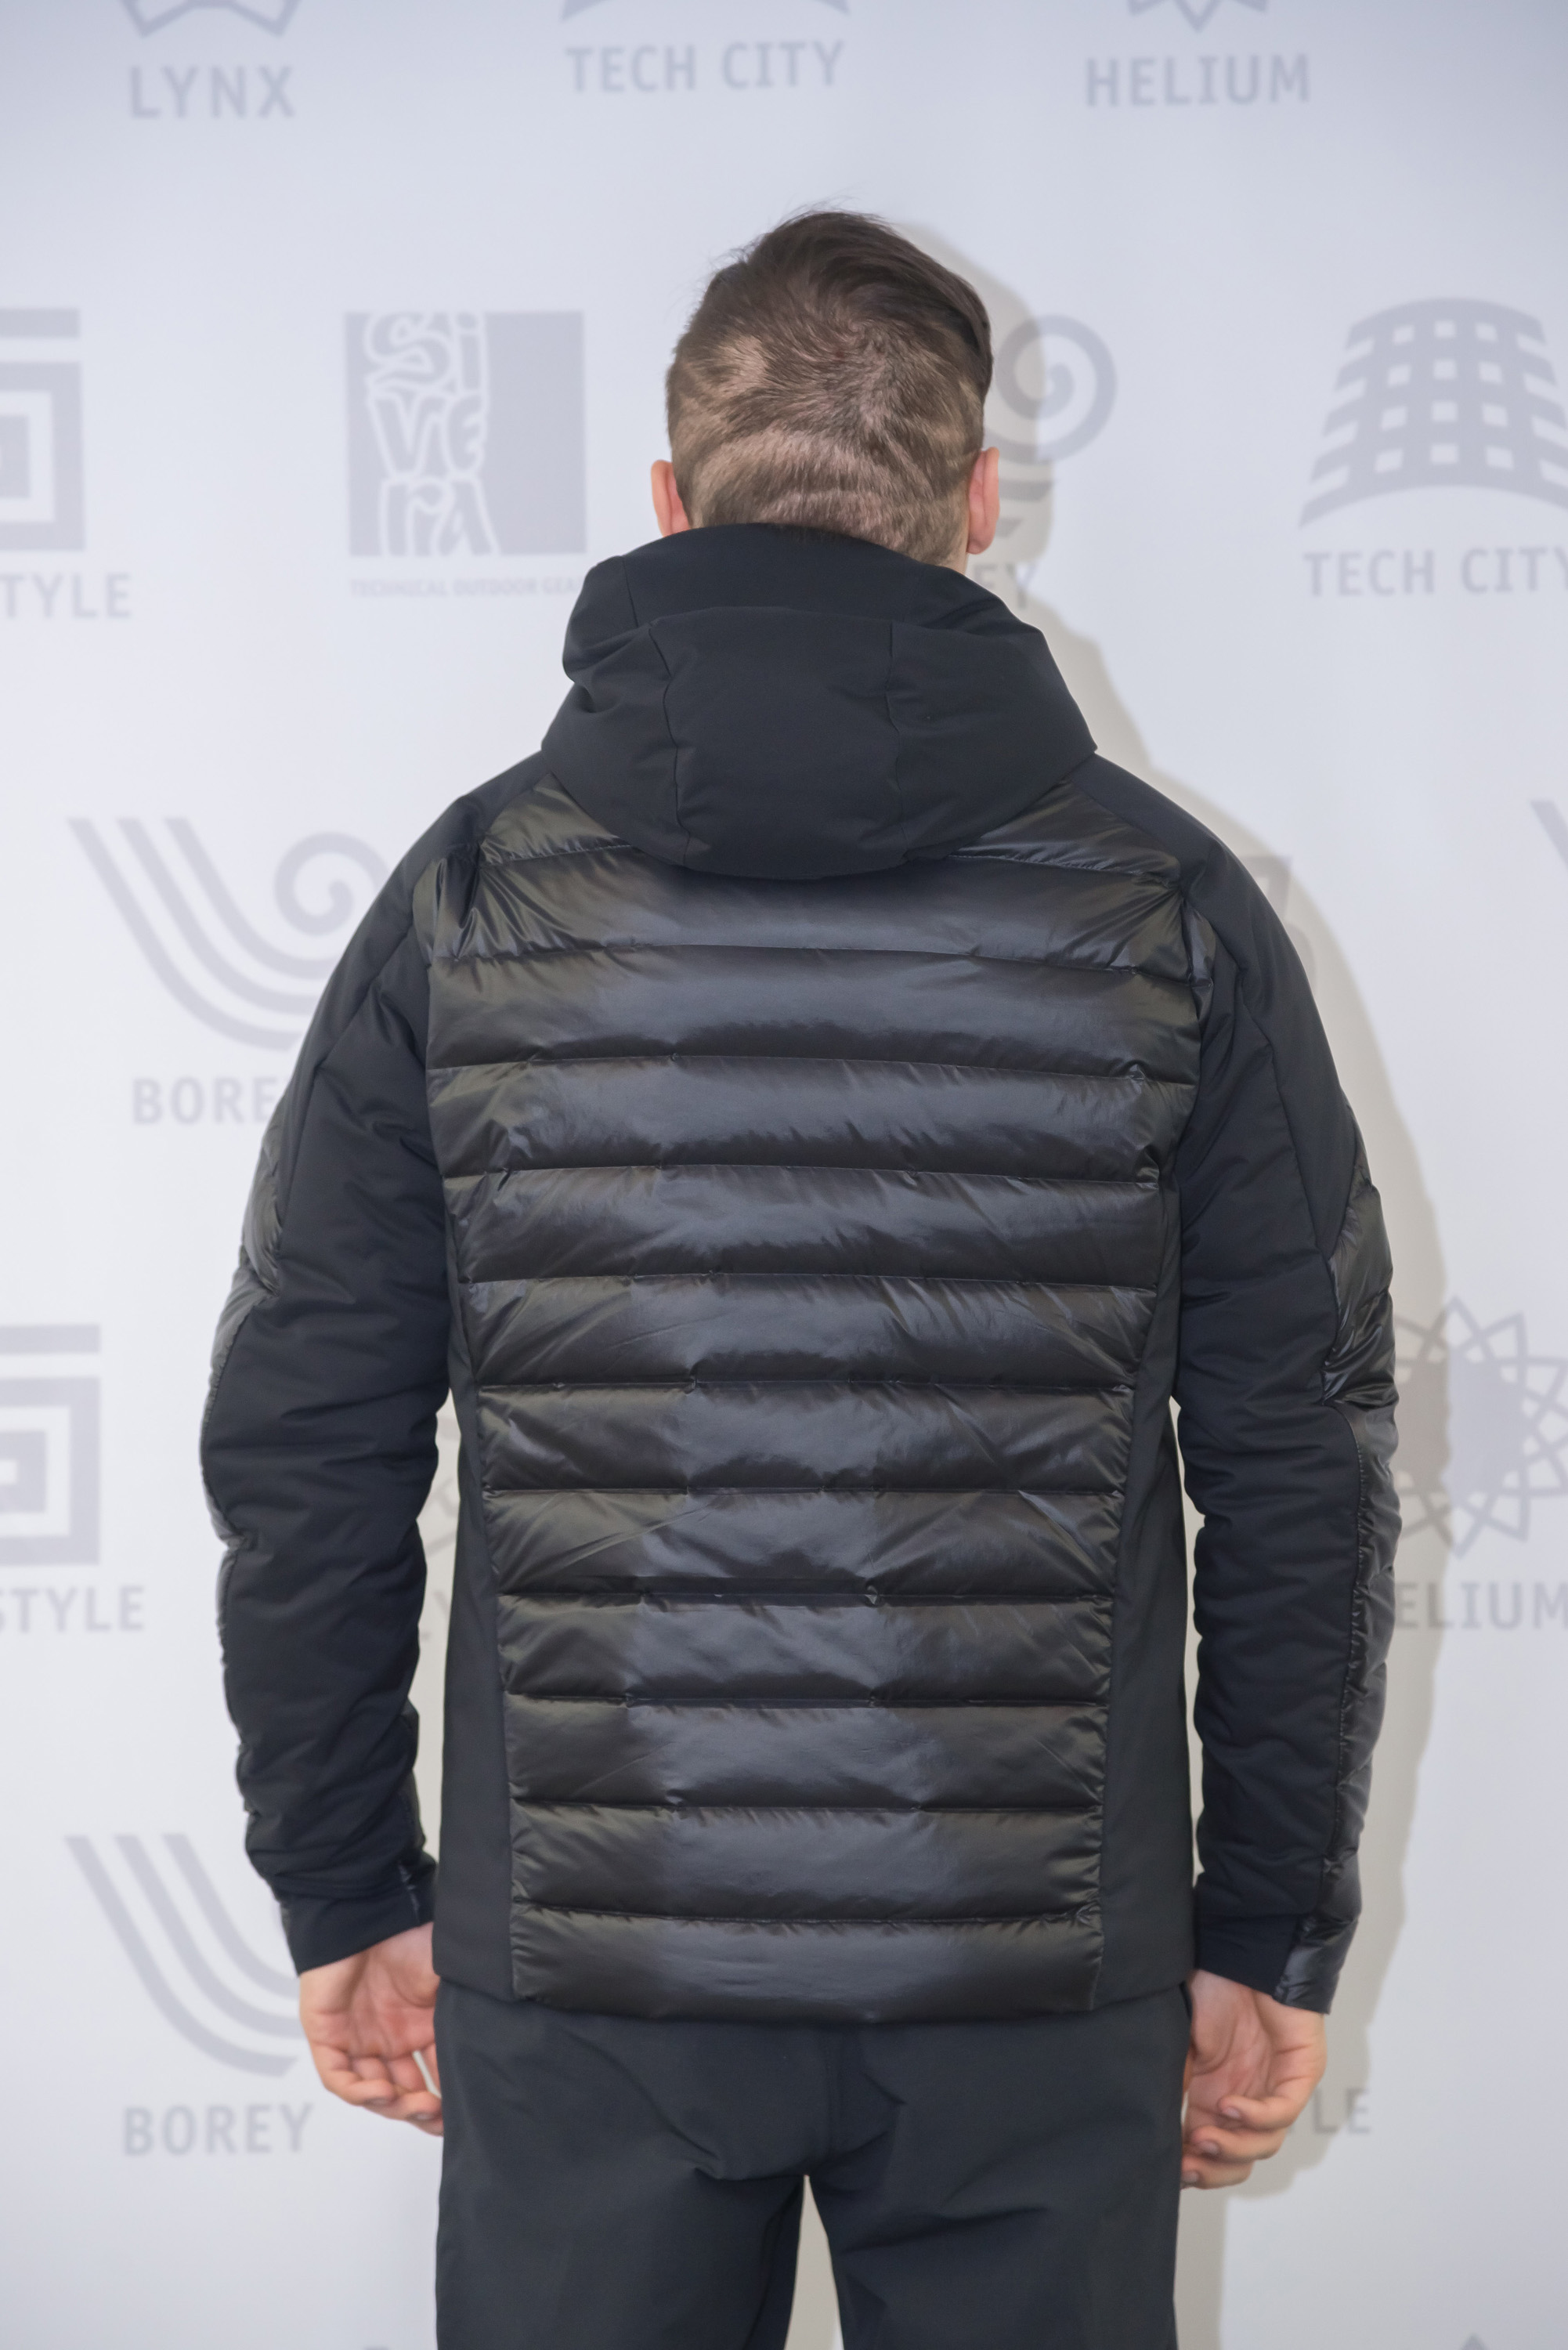 Siverа - Теплая мужская куртка Кебрик 3.0 